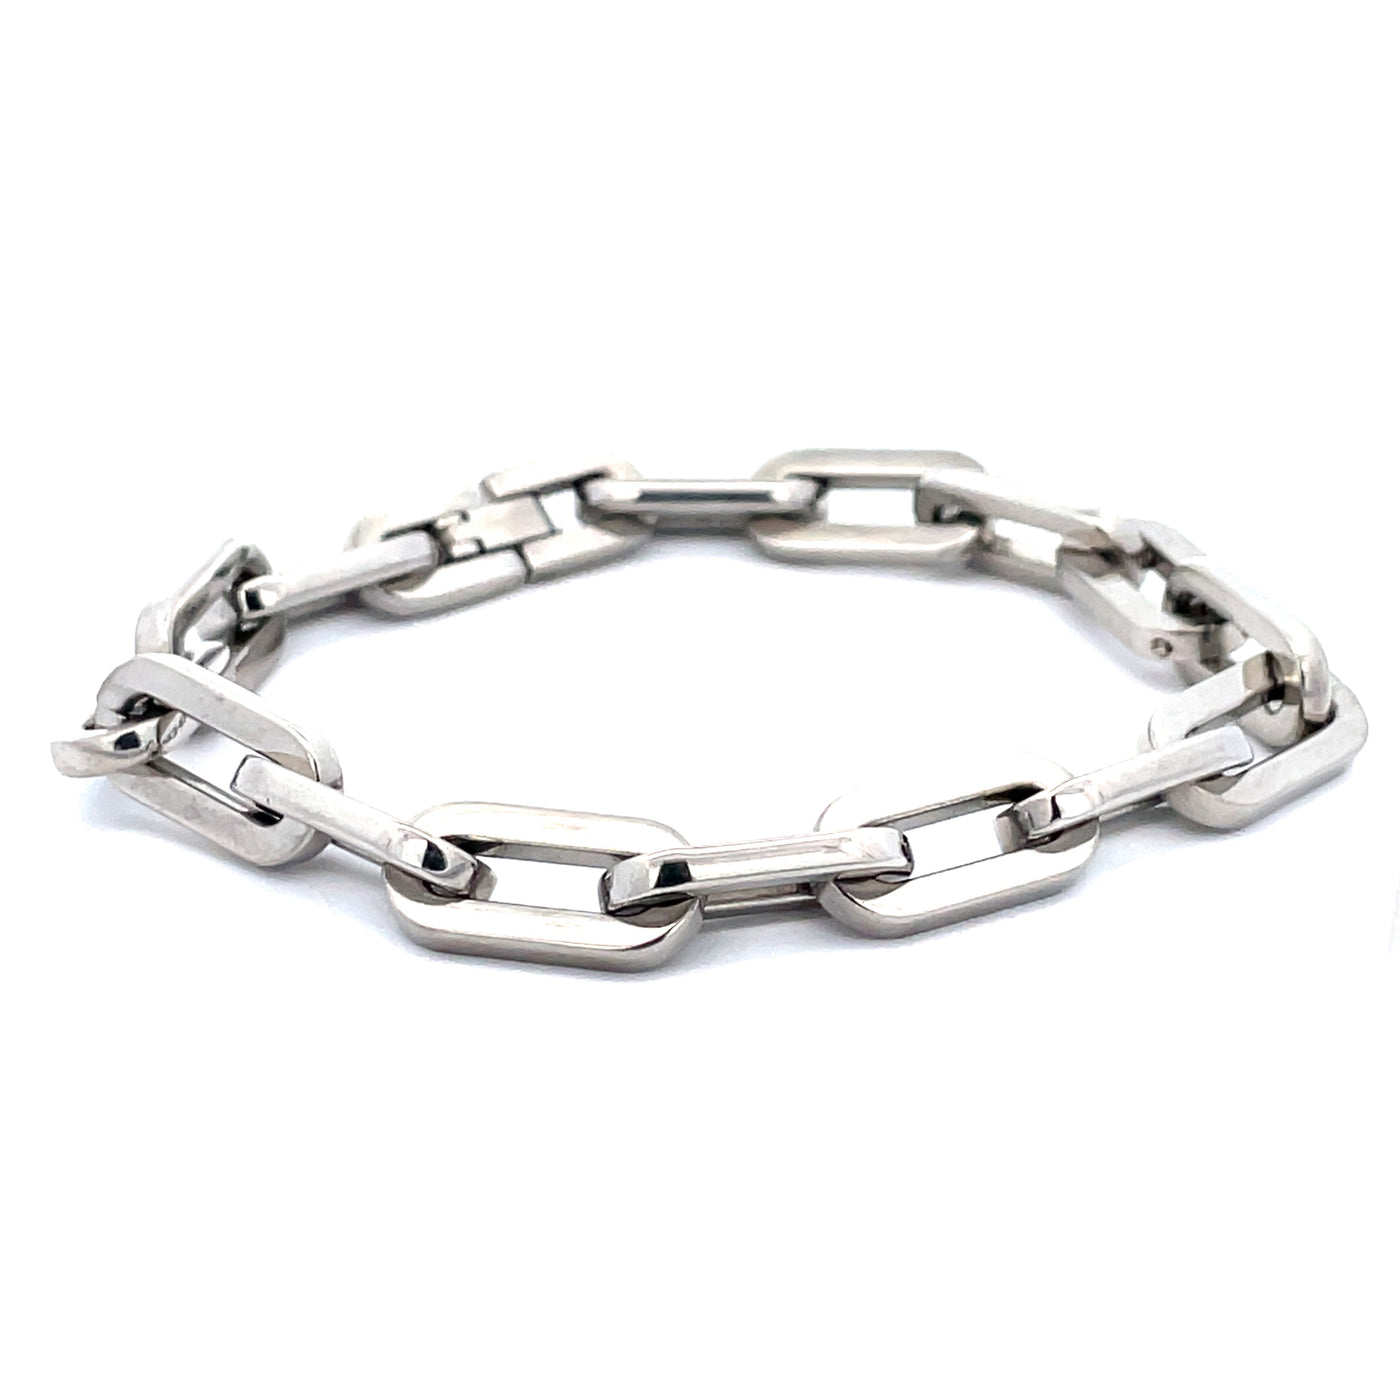 Stainless Steel Oval Link Bracelet